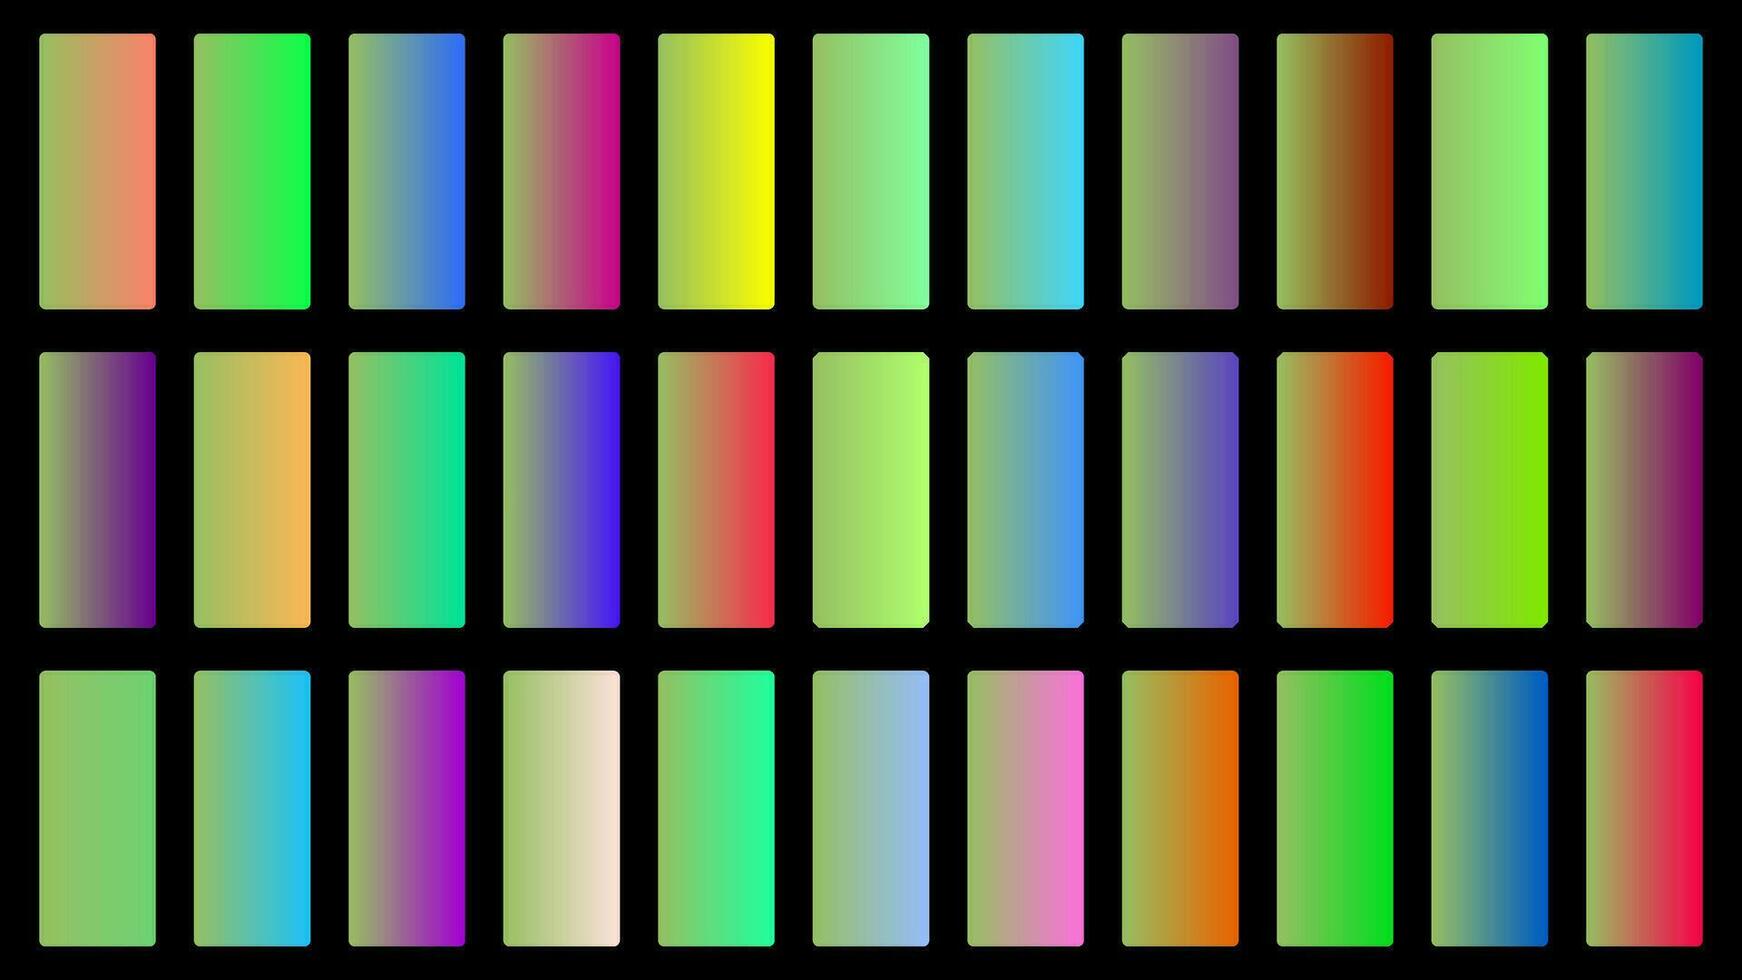 colorida Oliva cor sombra linear gradiente paleta amostras rede kit arredondado retângulos modelo conjunto vetor